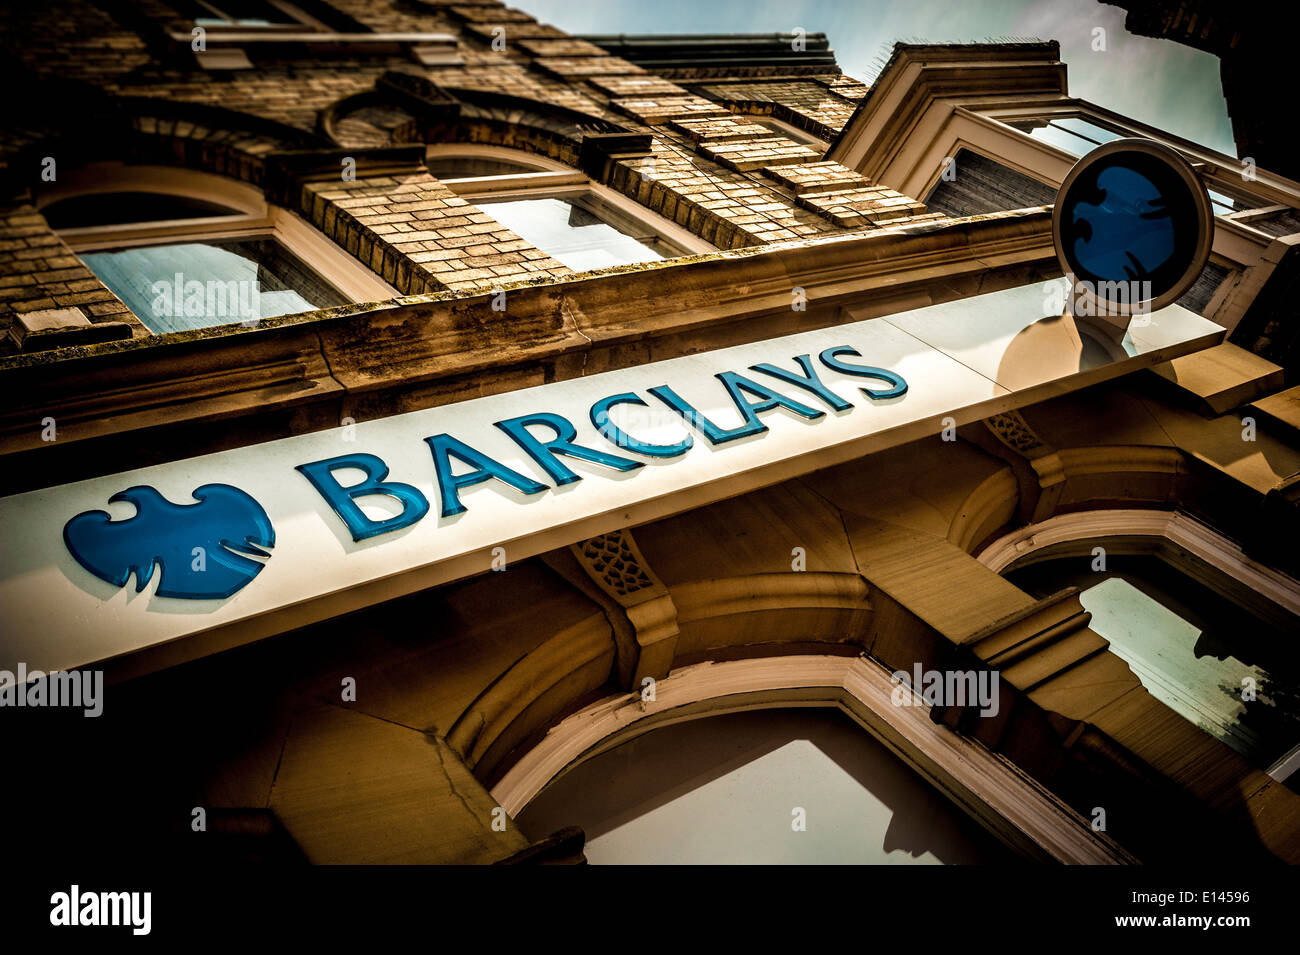 Barclays Bank firmar Foto de stock